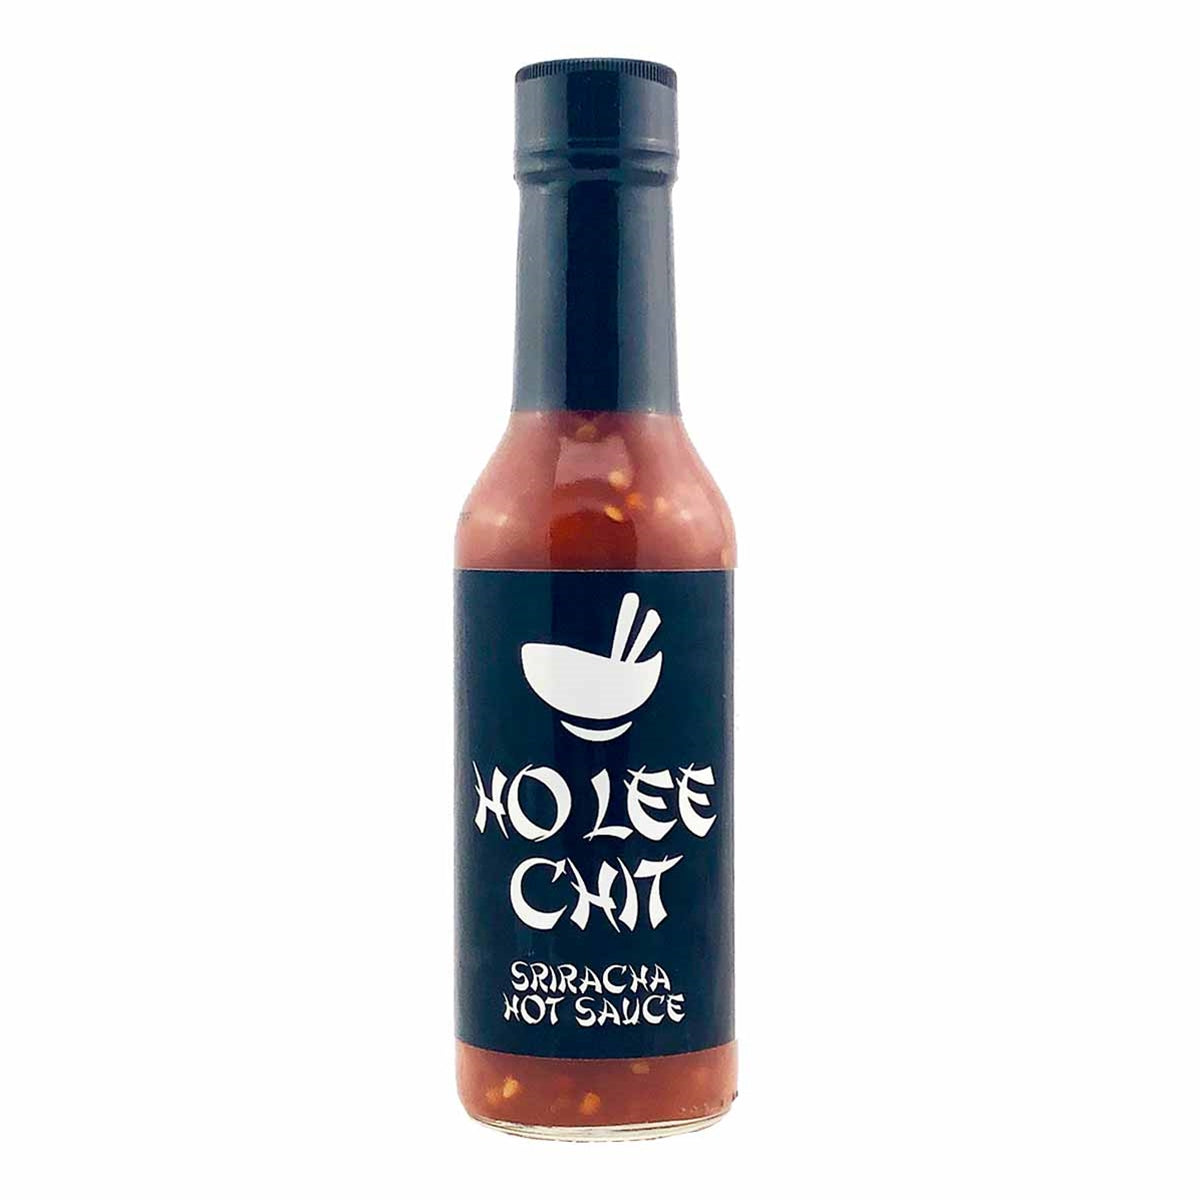 Hot Sauce Ho Lee Chit Sriracha 5 oz Heat 6